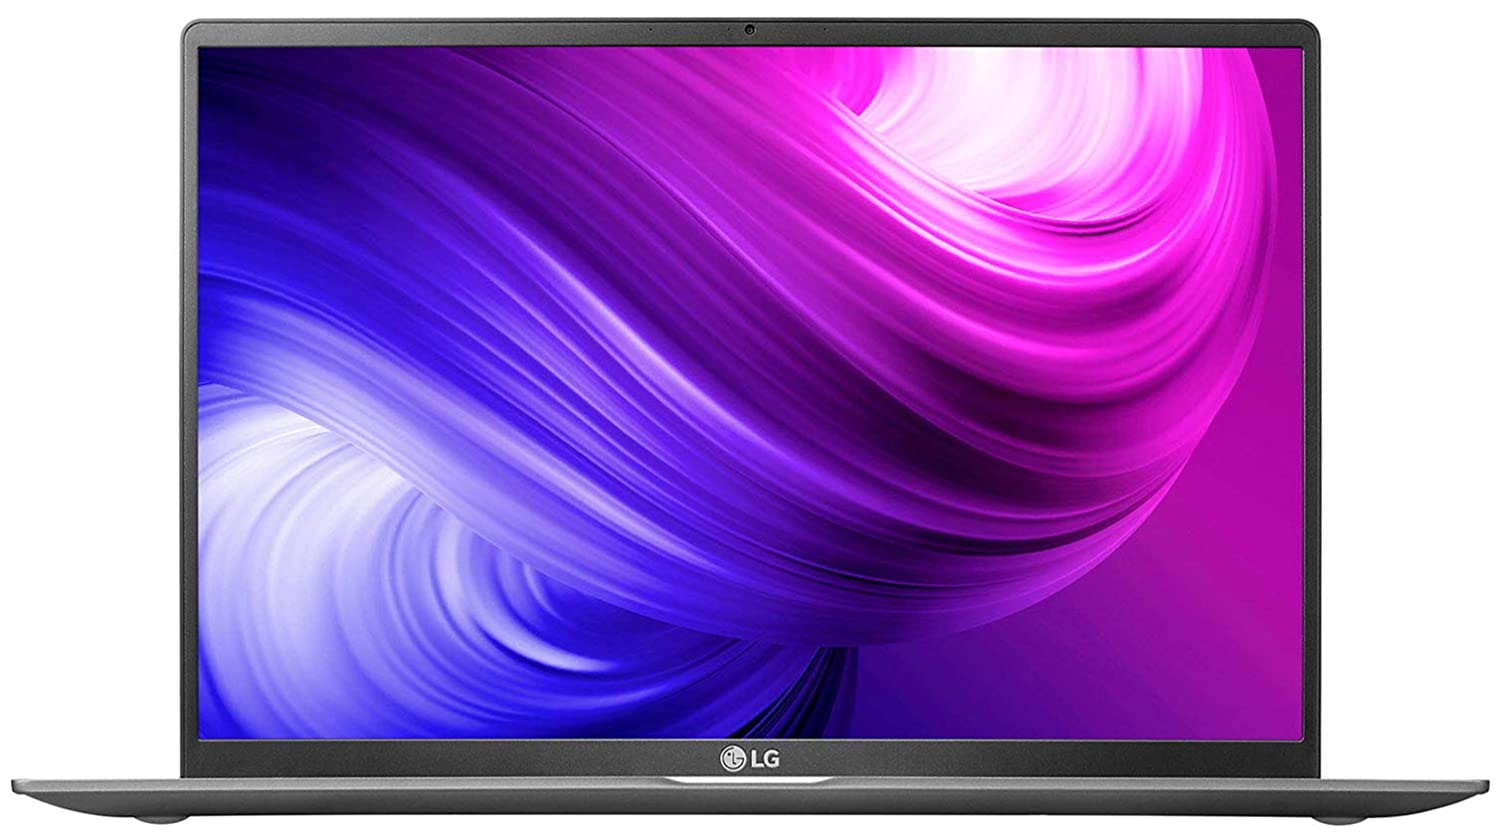 LG Gram 10th Gen Intel Core i7 Laptop